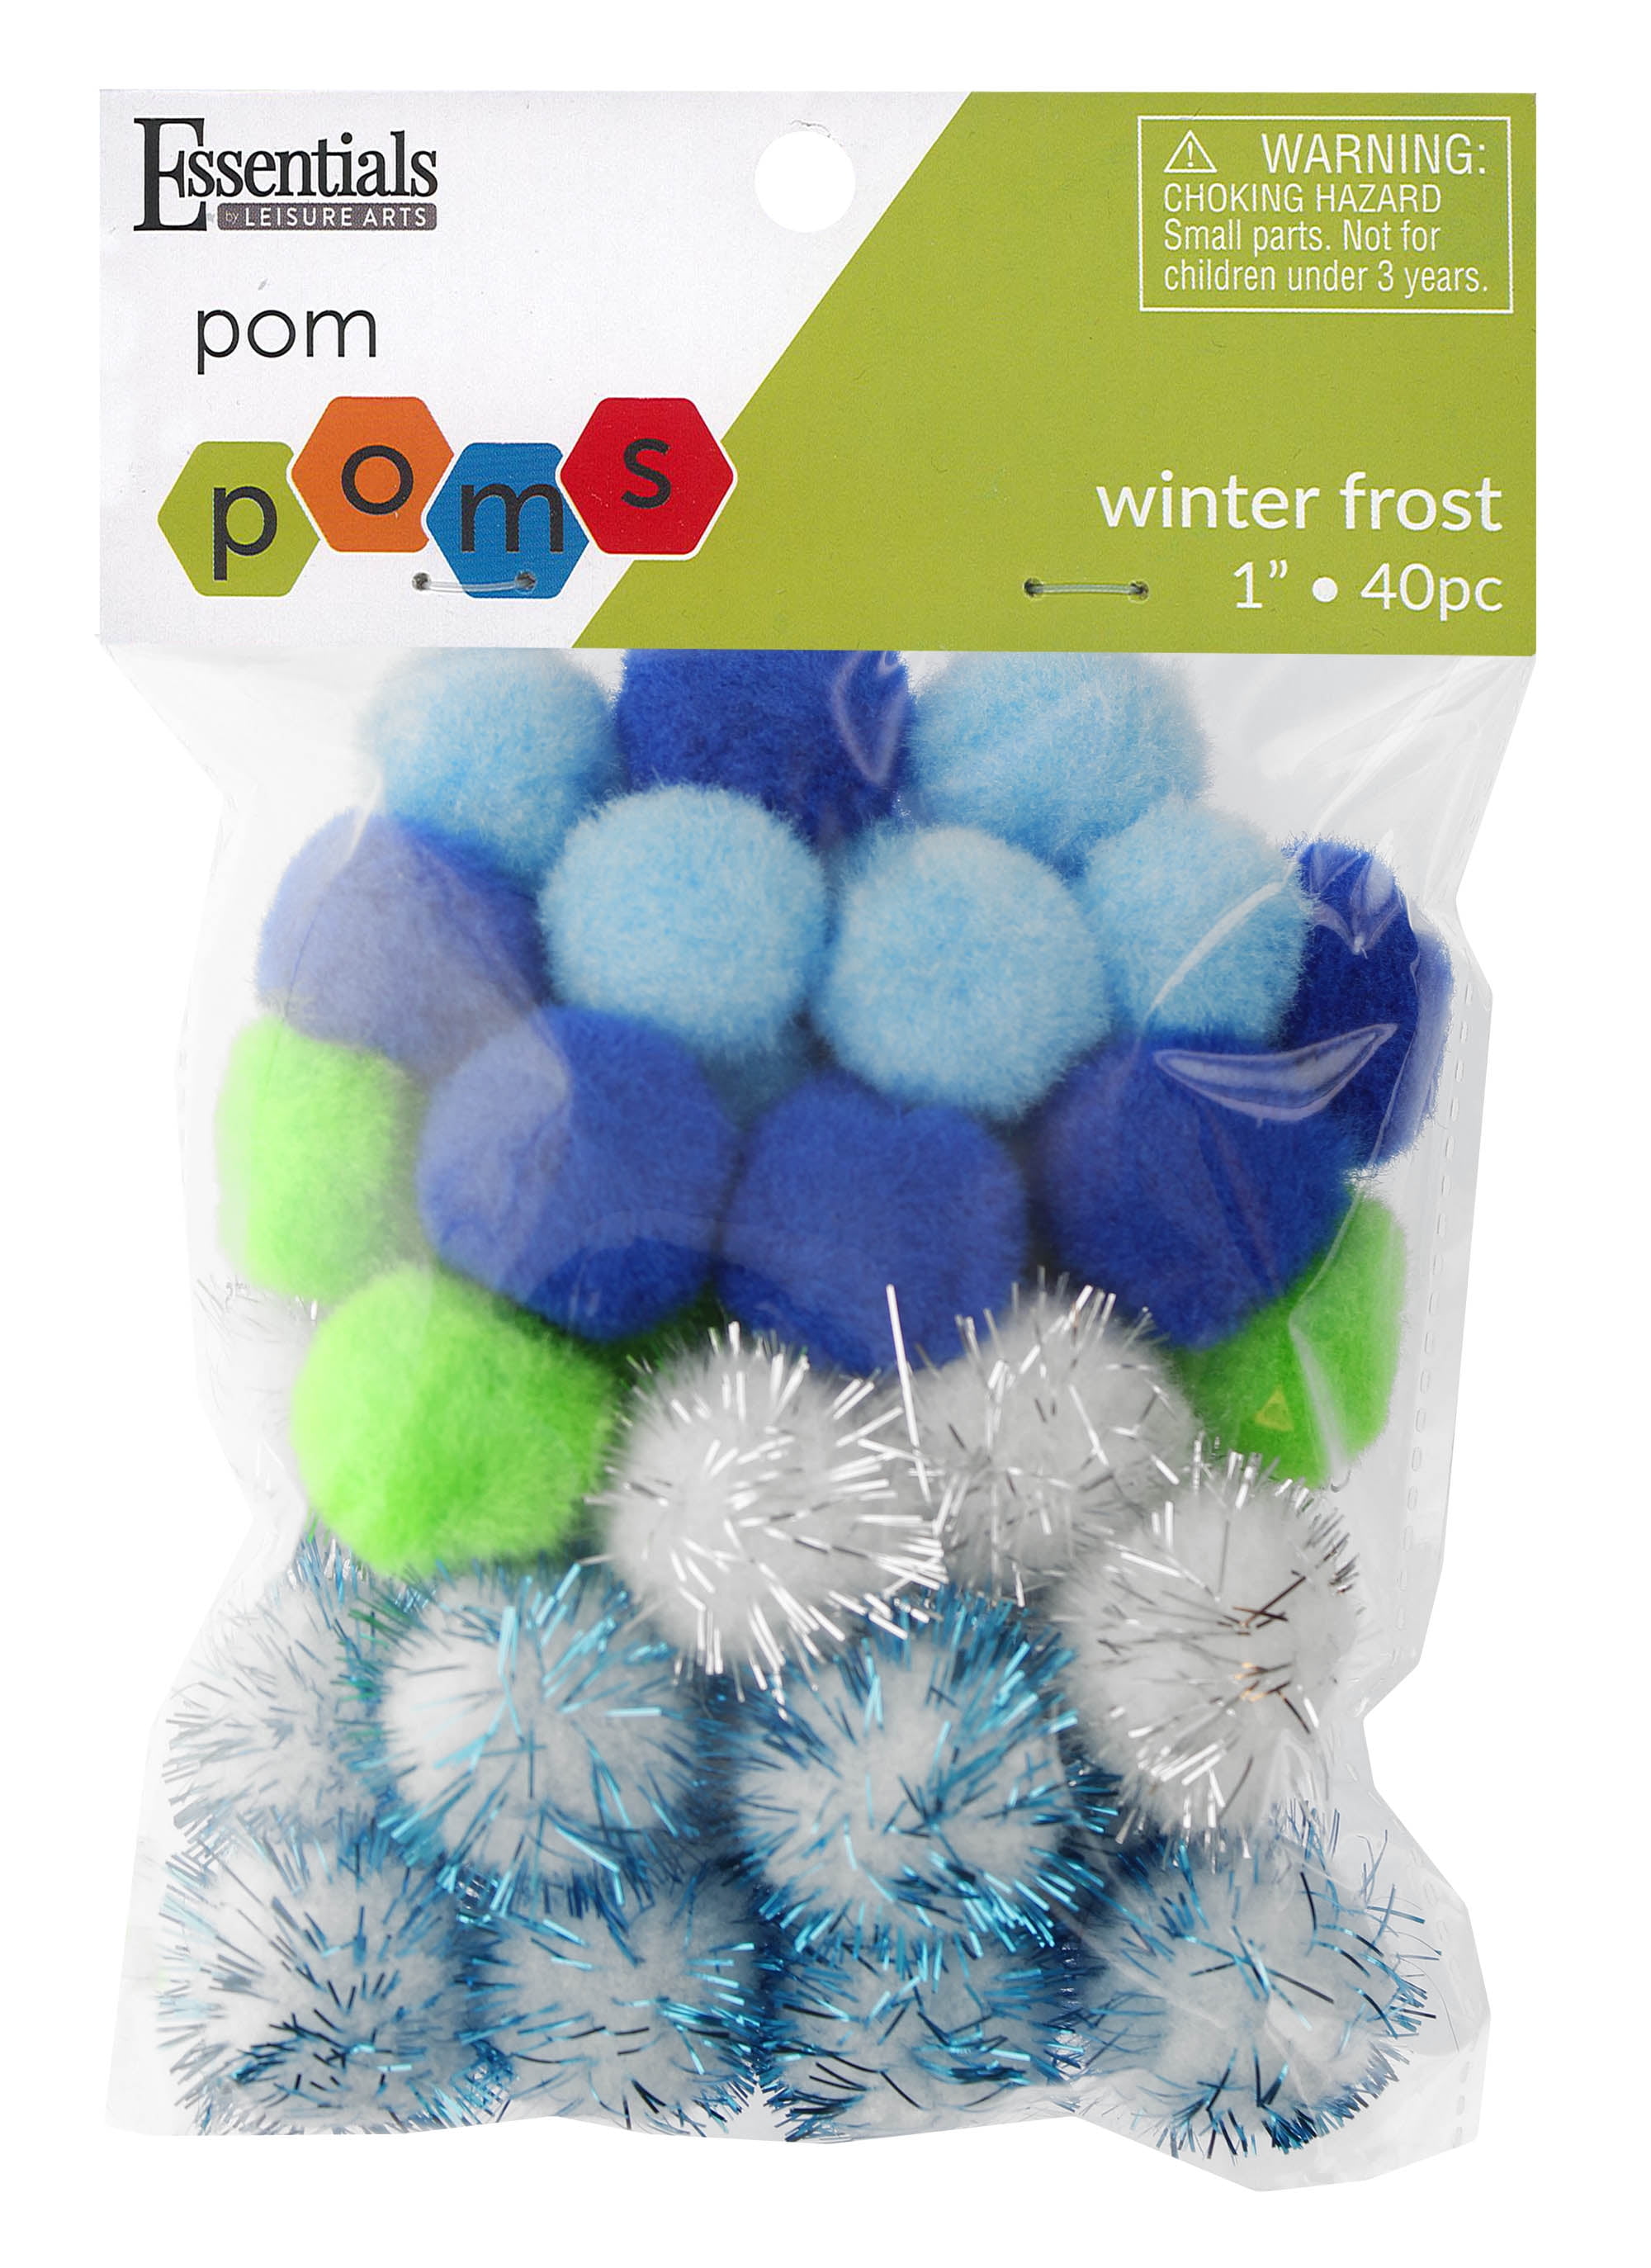 Essentials by Leisure Pom Pom 1 inch Winter Frost Astd 40pc, Blue